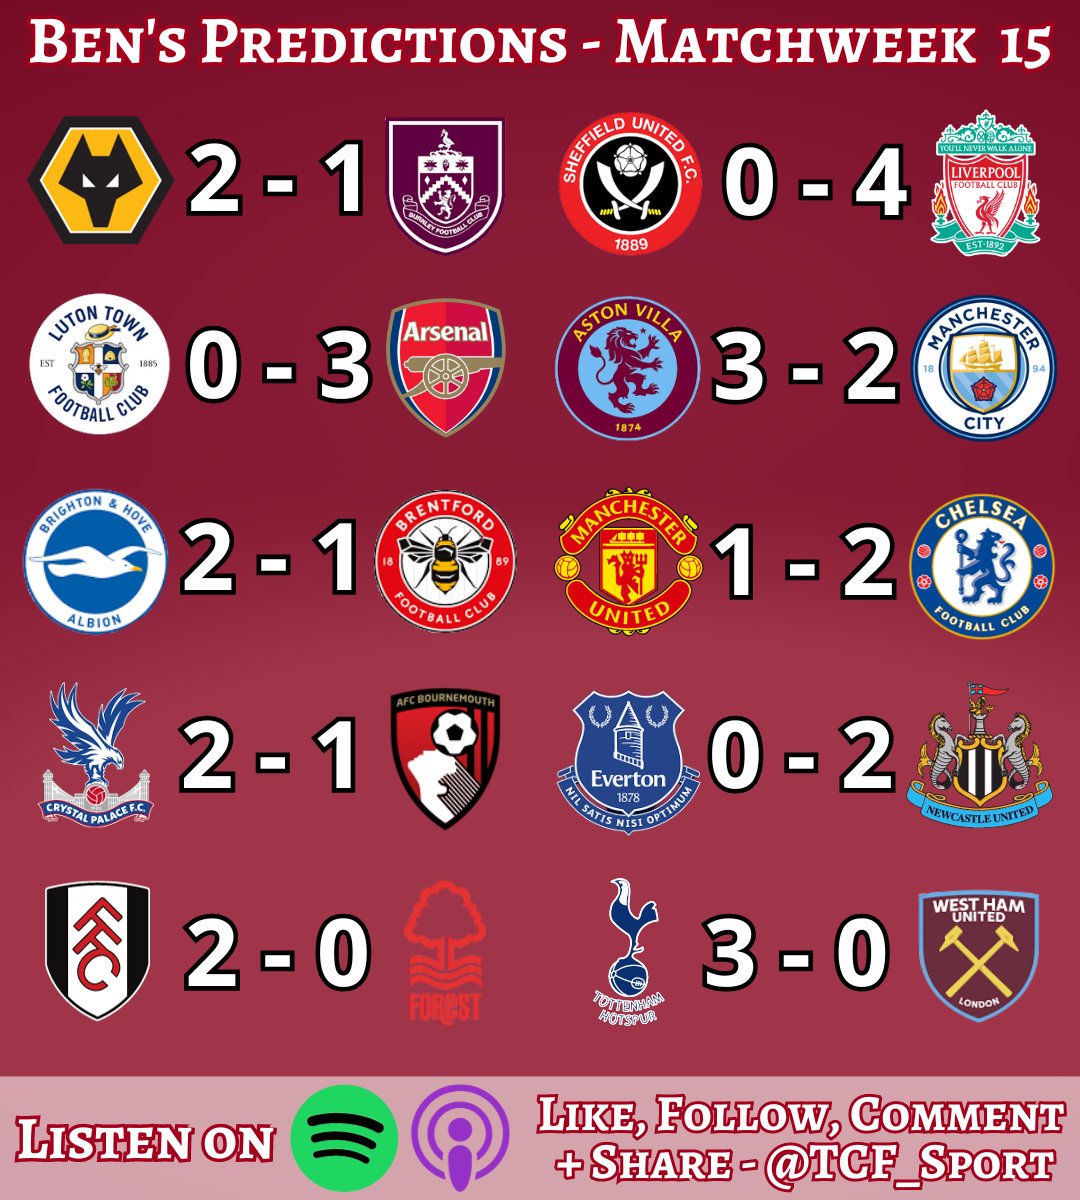 Check my premier league predictions for this weekend. #premierleague